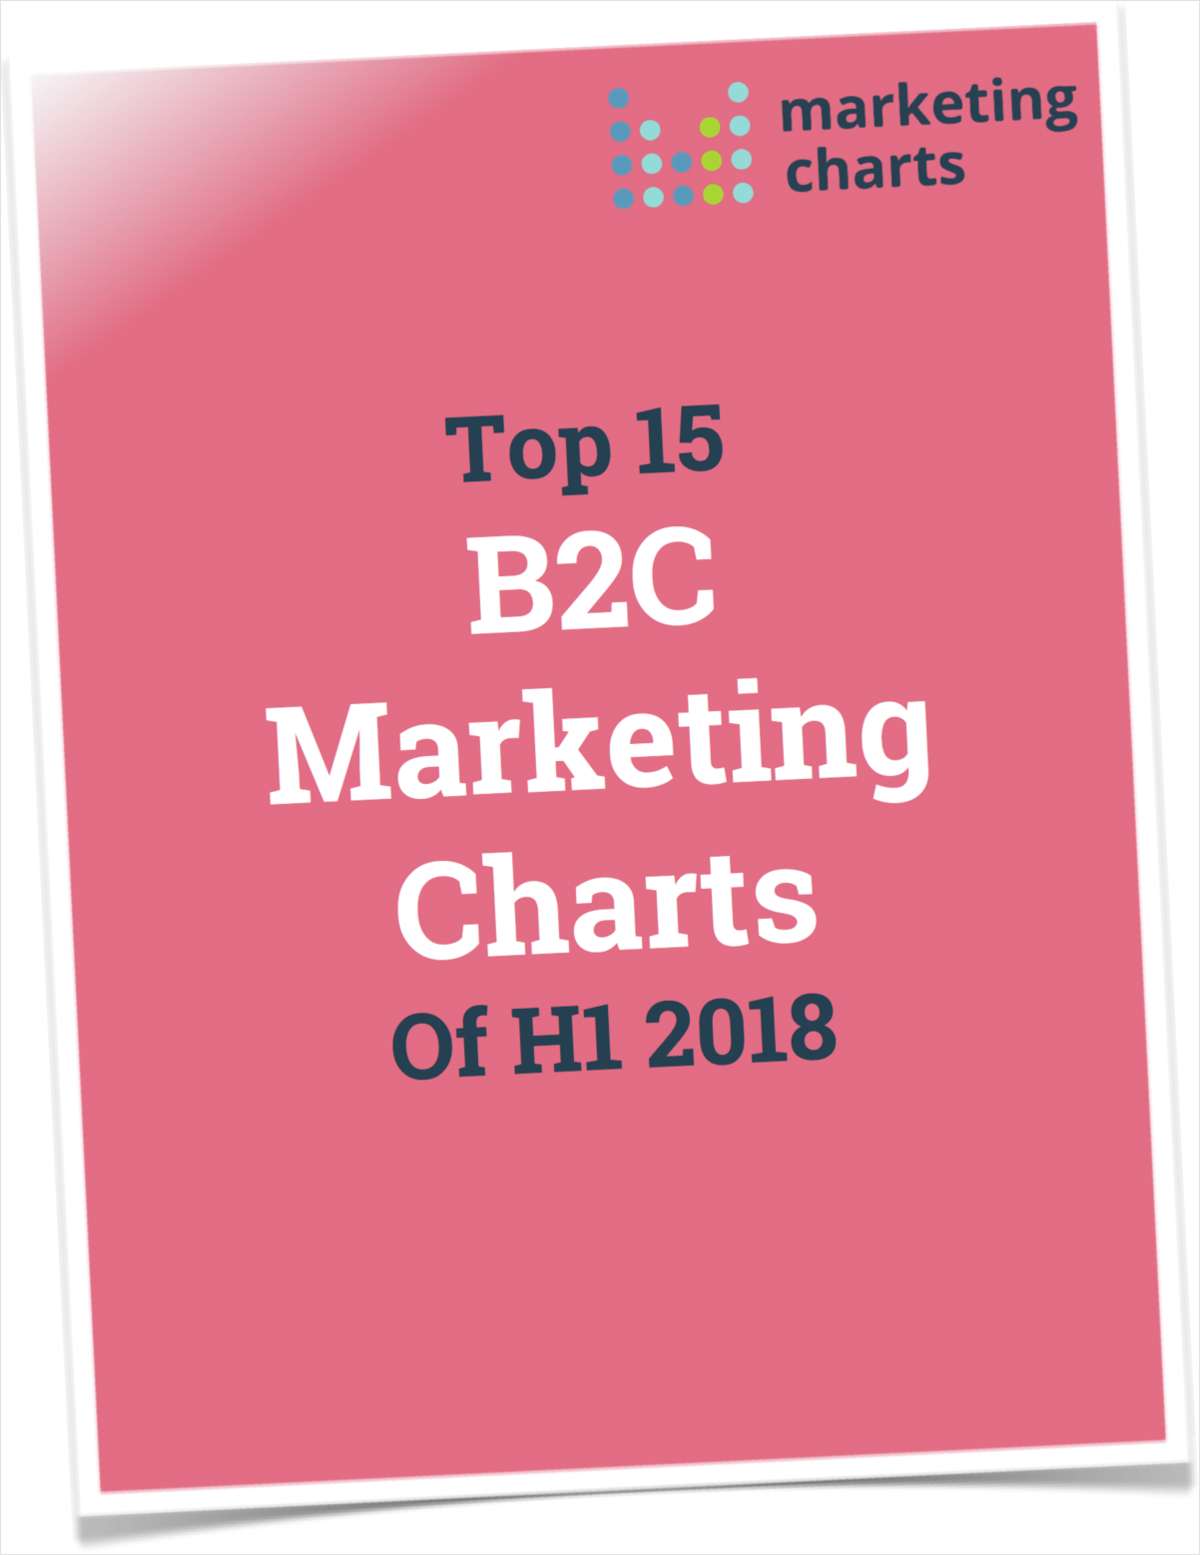 Top 15 B2C Marketing Charts of H1 2018